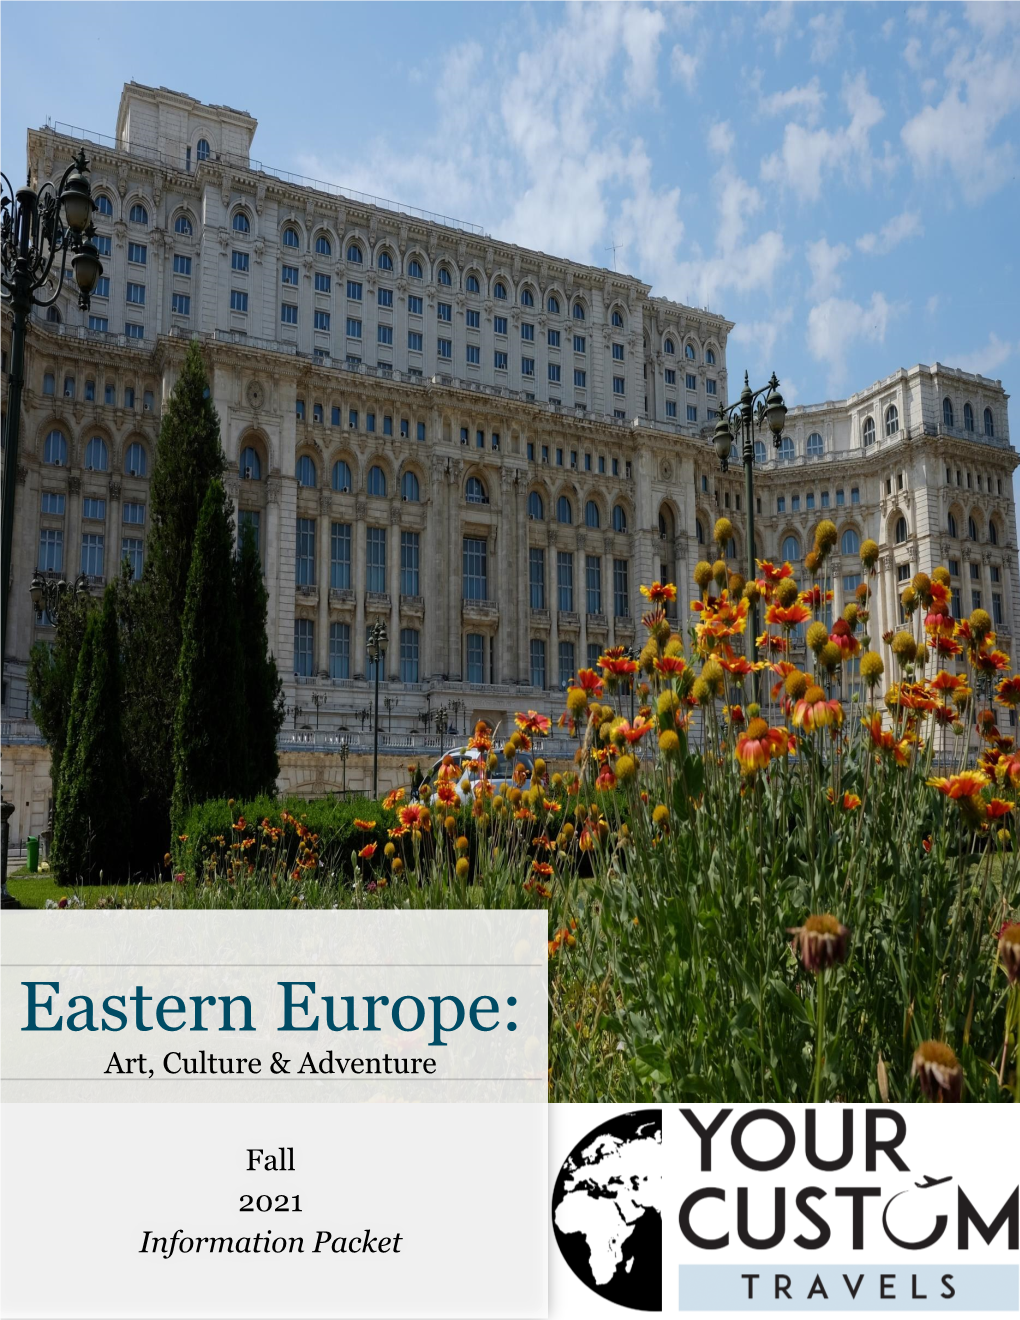 Eastern Europe: Art, Culture & Adventure